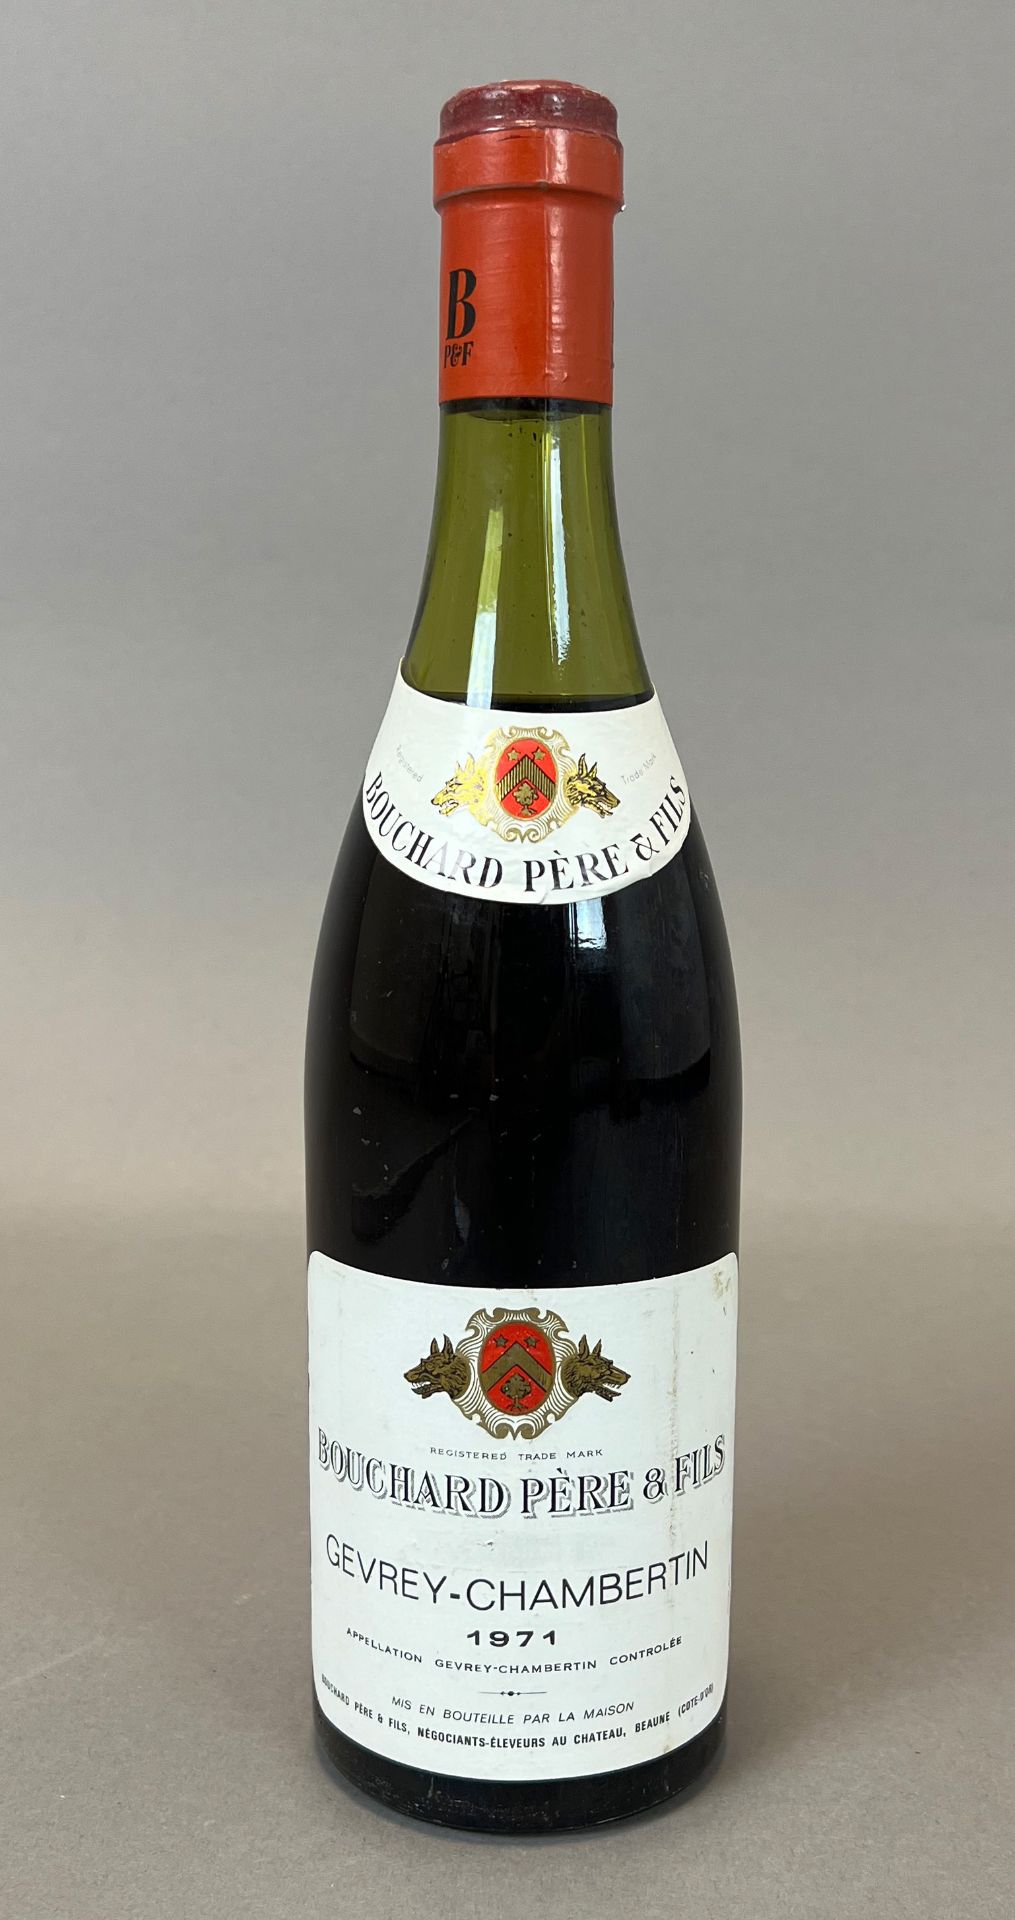 1 bottle of red wine. Bouchard Père & Fils. Gevrey-Chambertin. 1971.